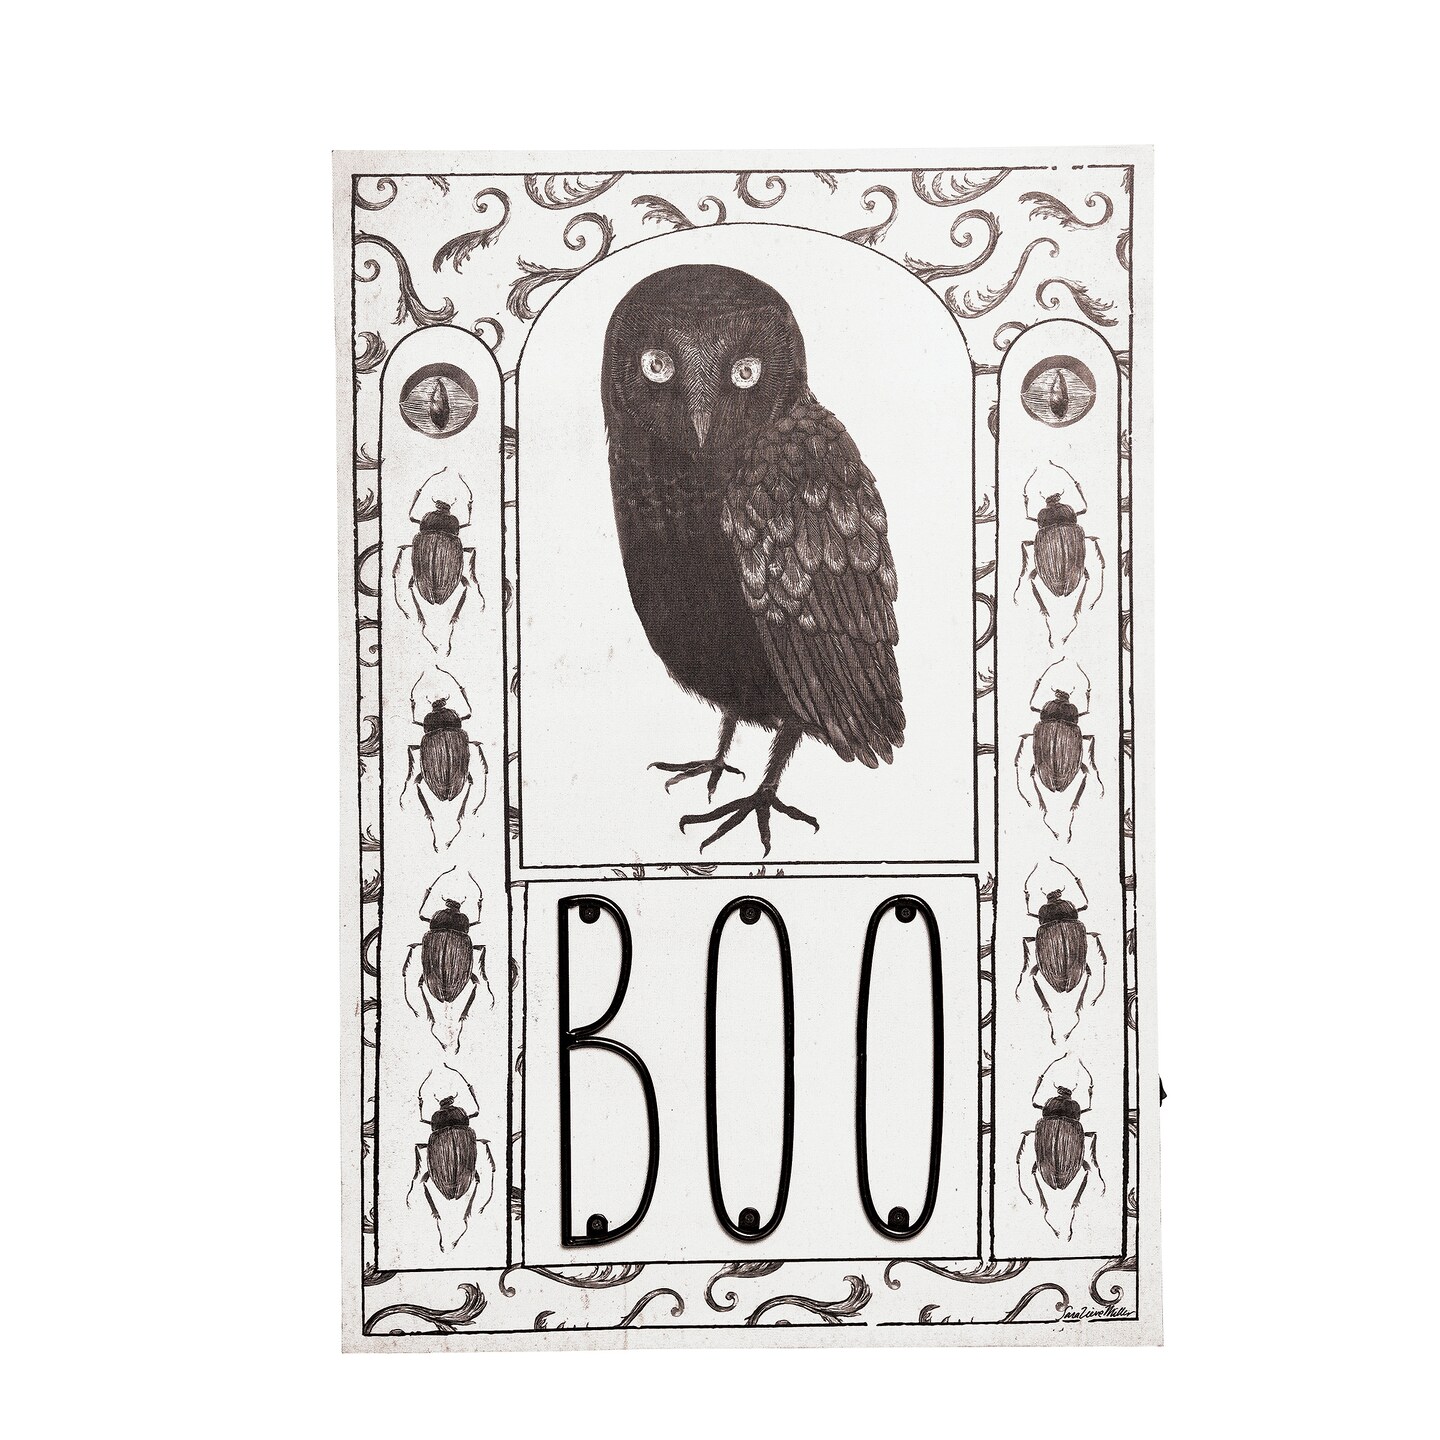 Boo Owl Halloween Light-Up Led Wall Art Decor Decoration 15.75 x 0.98 x 23.75 Inches.